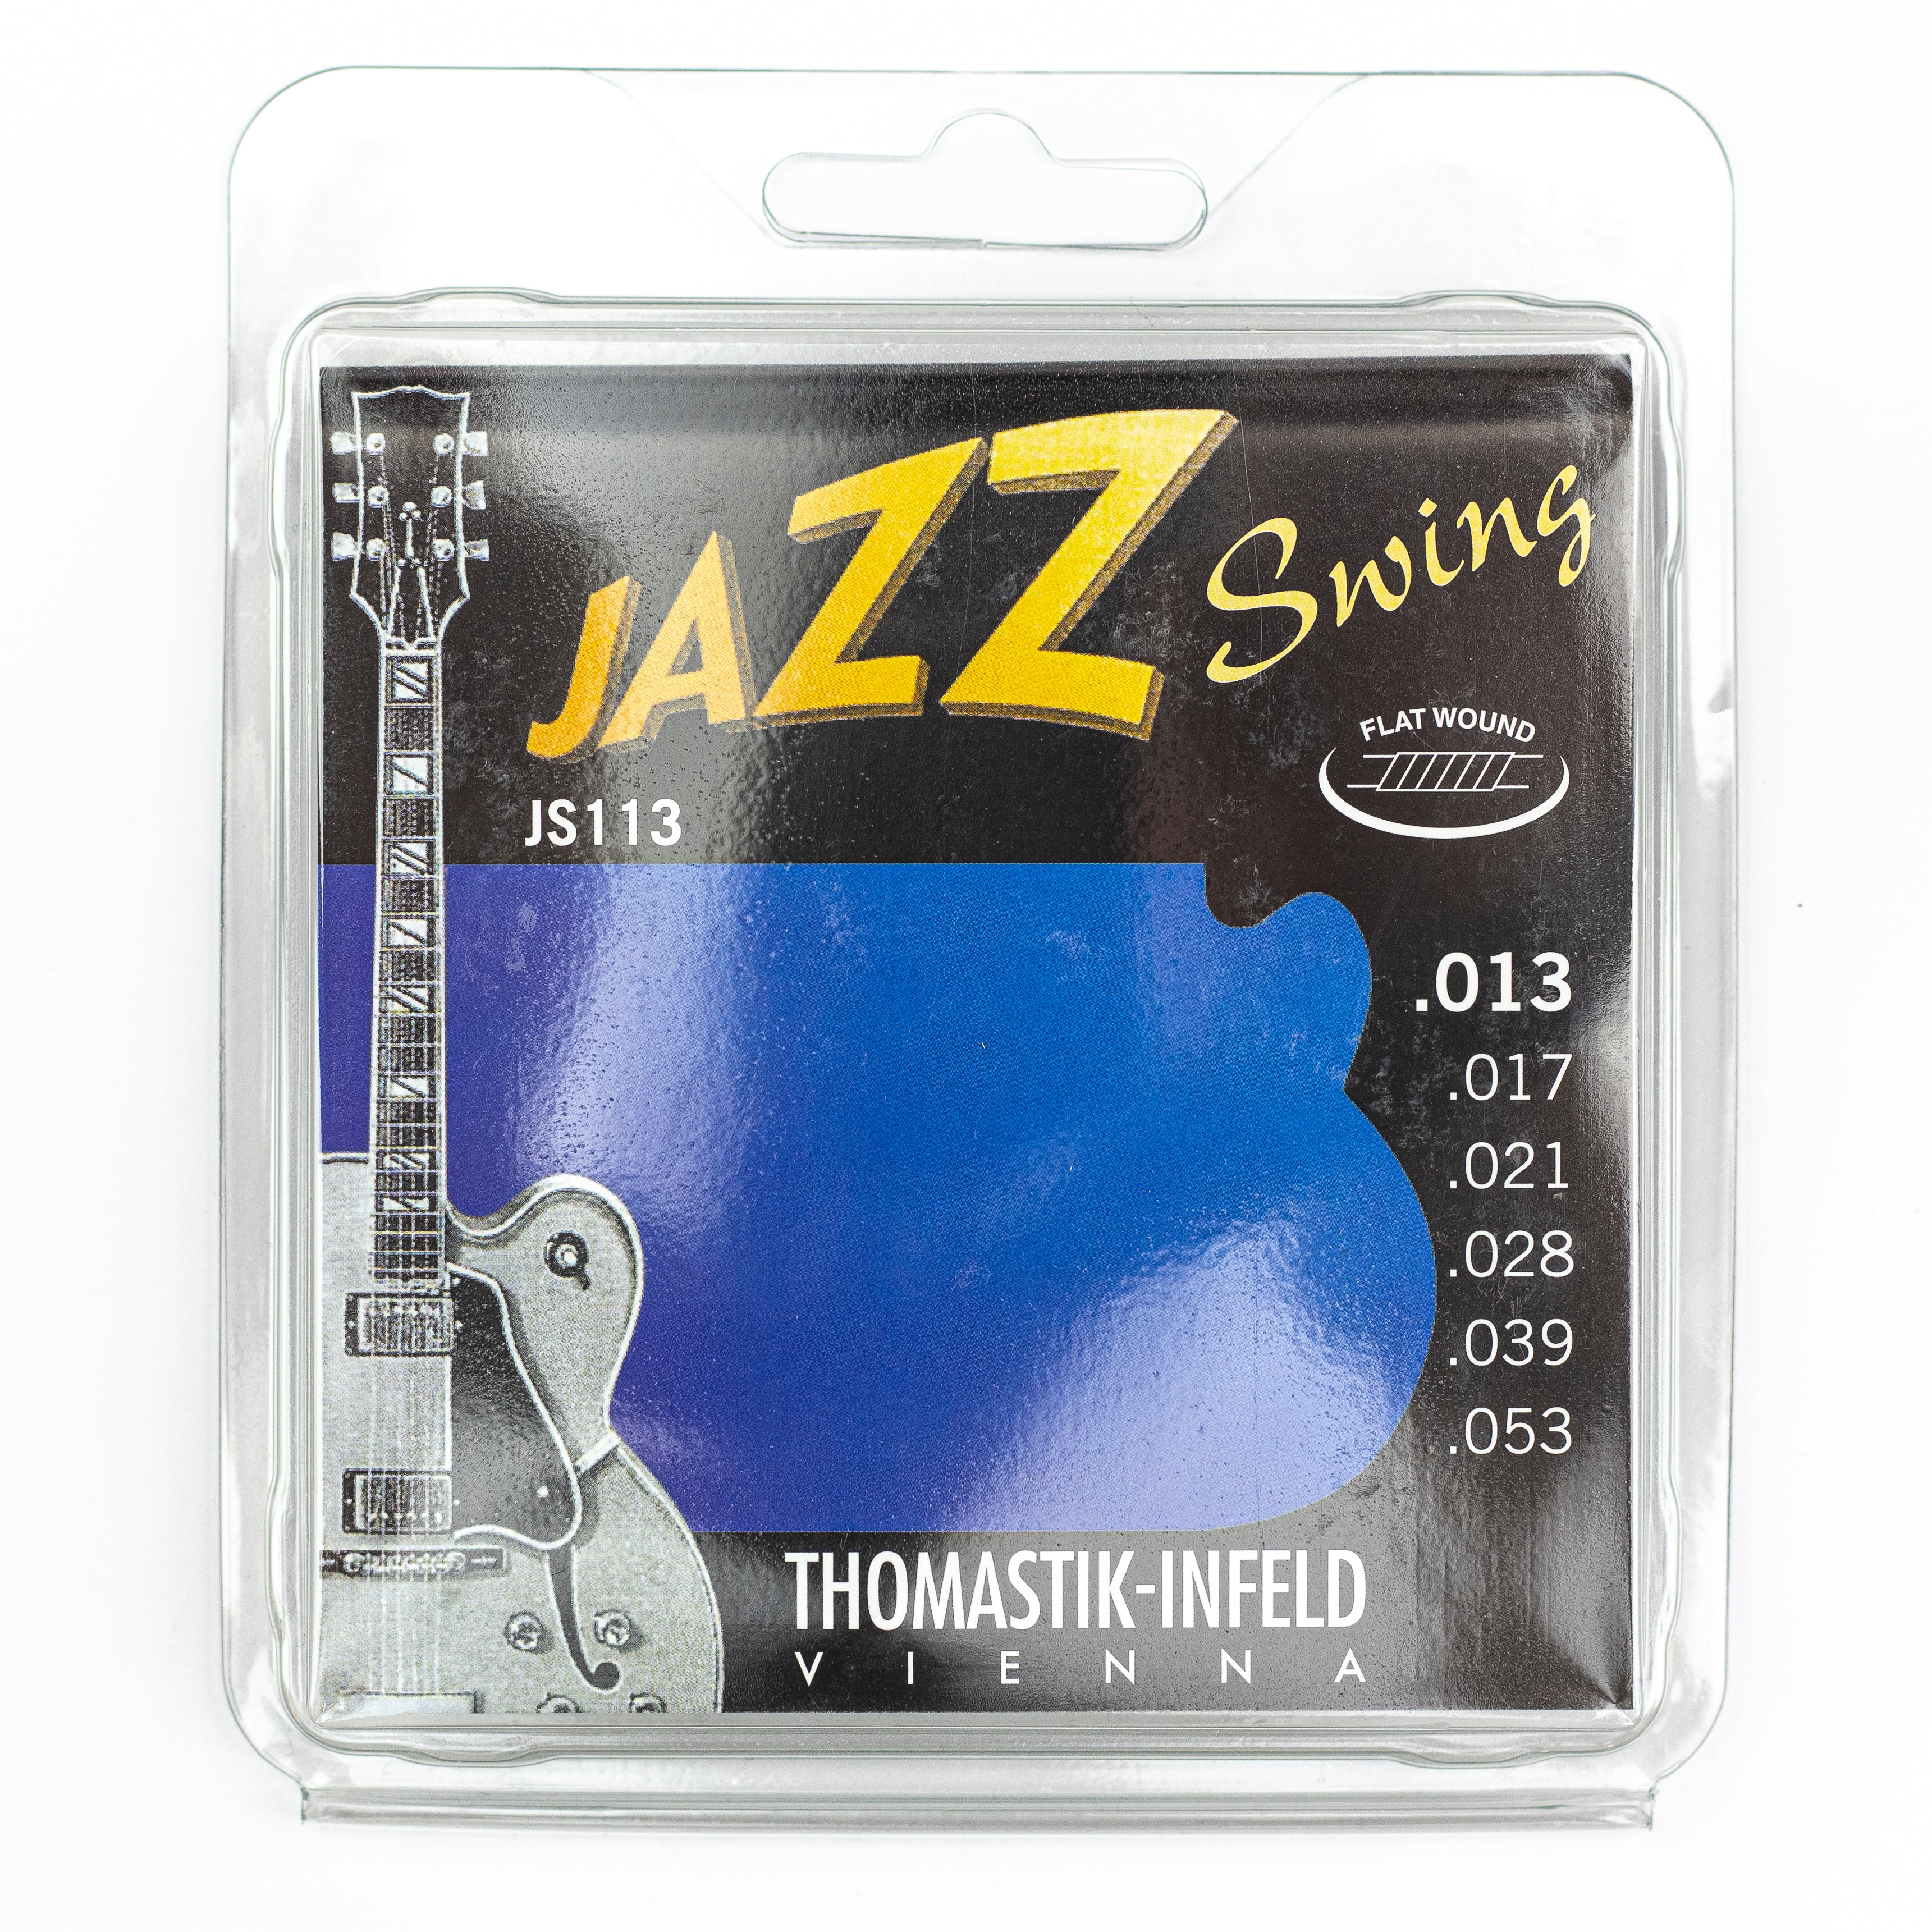 Thomastik-Infeld JS113 Jazz Swing Flatwound 13-53 Electric Guitar Strings